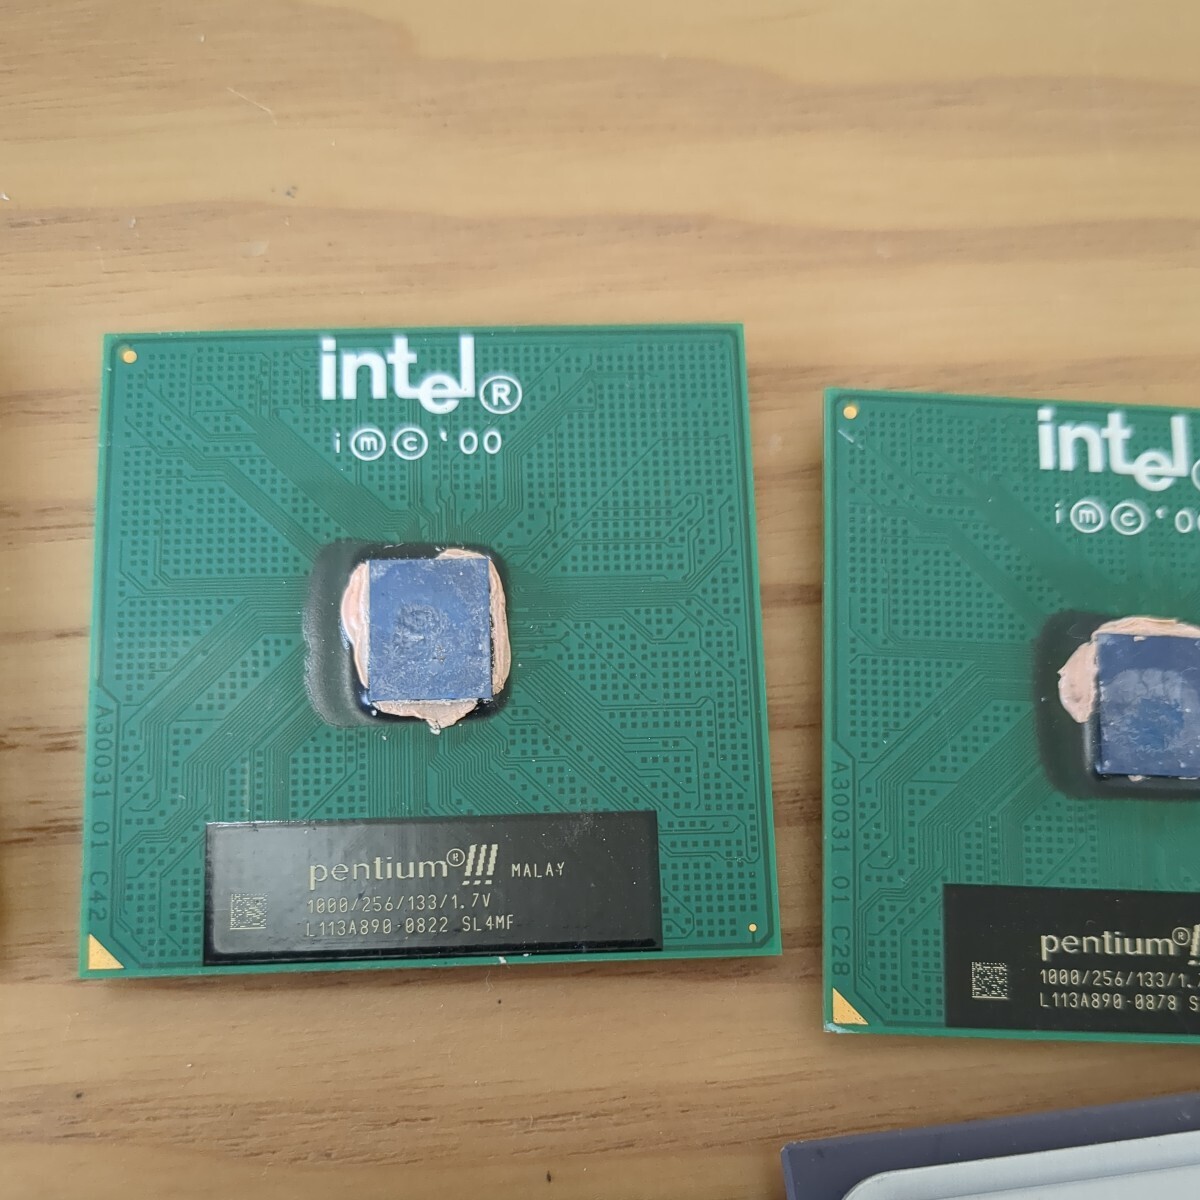 CPU Intel AMD core 7 sheets set sale 